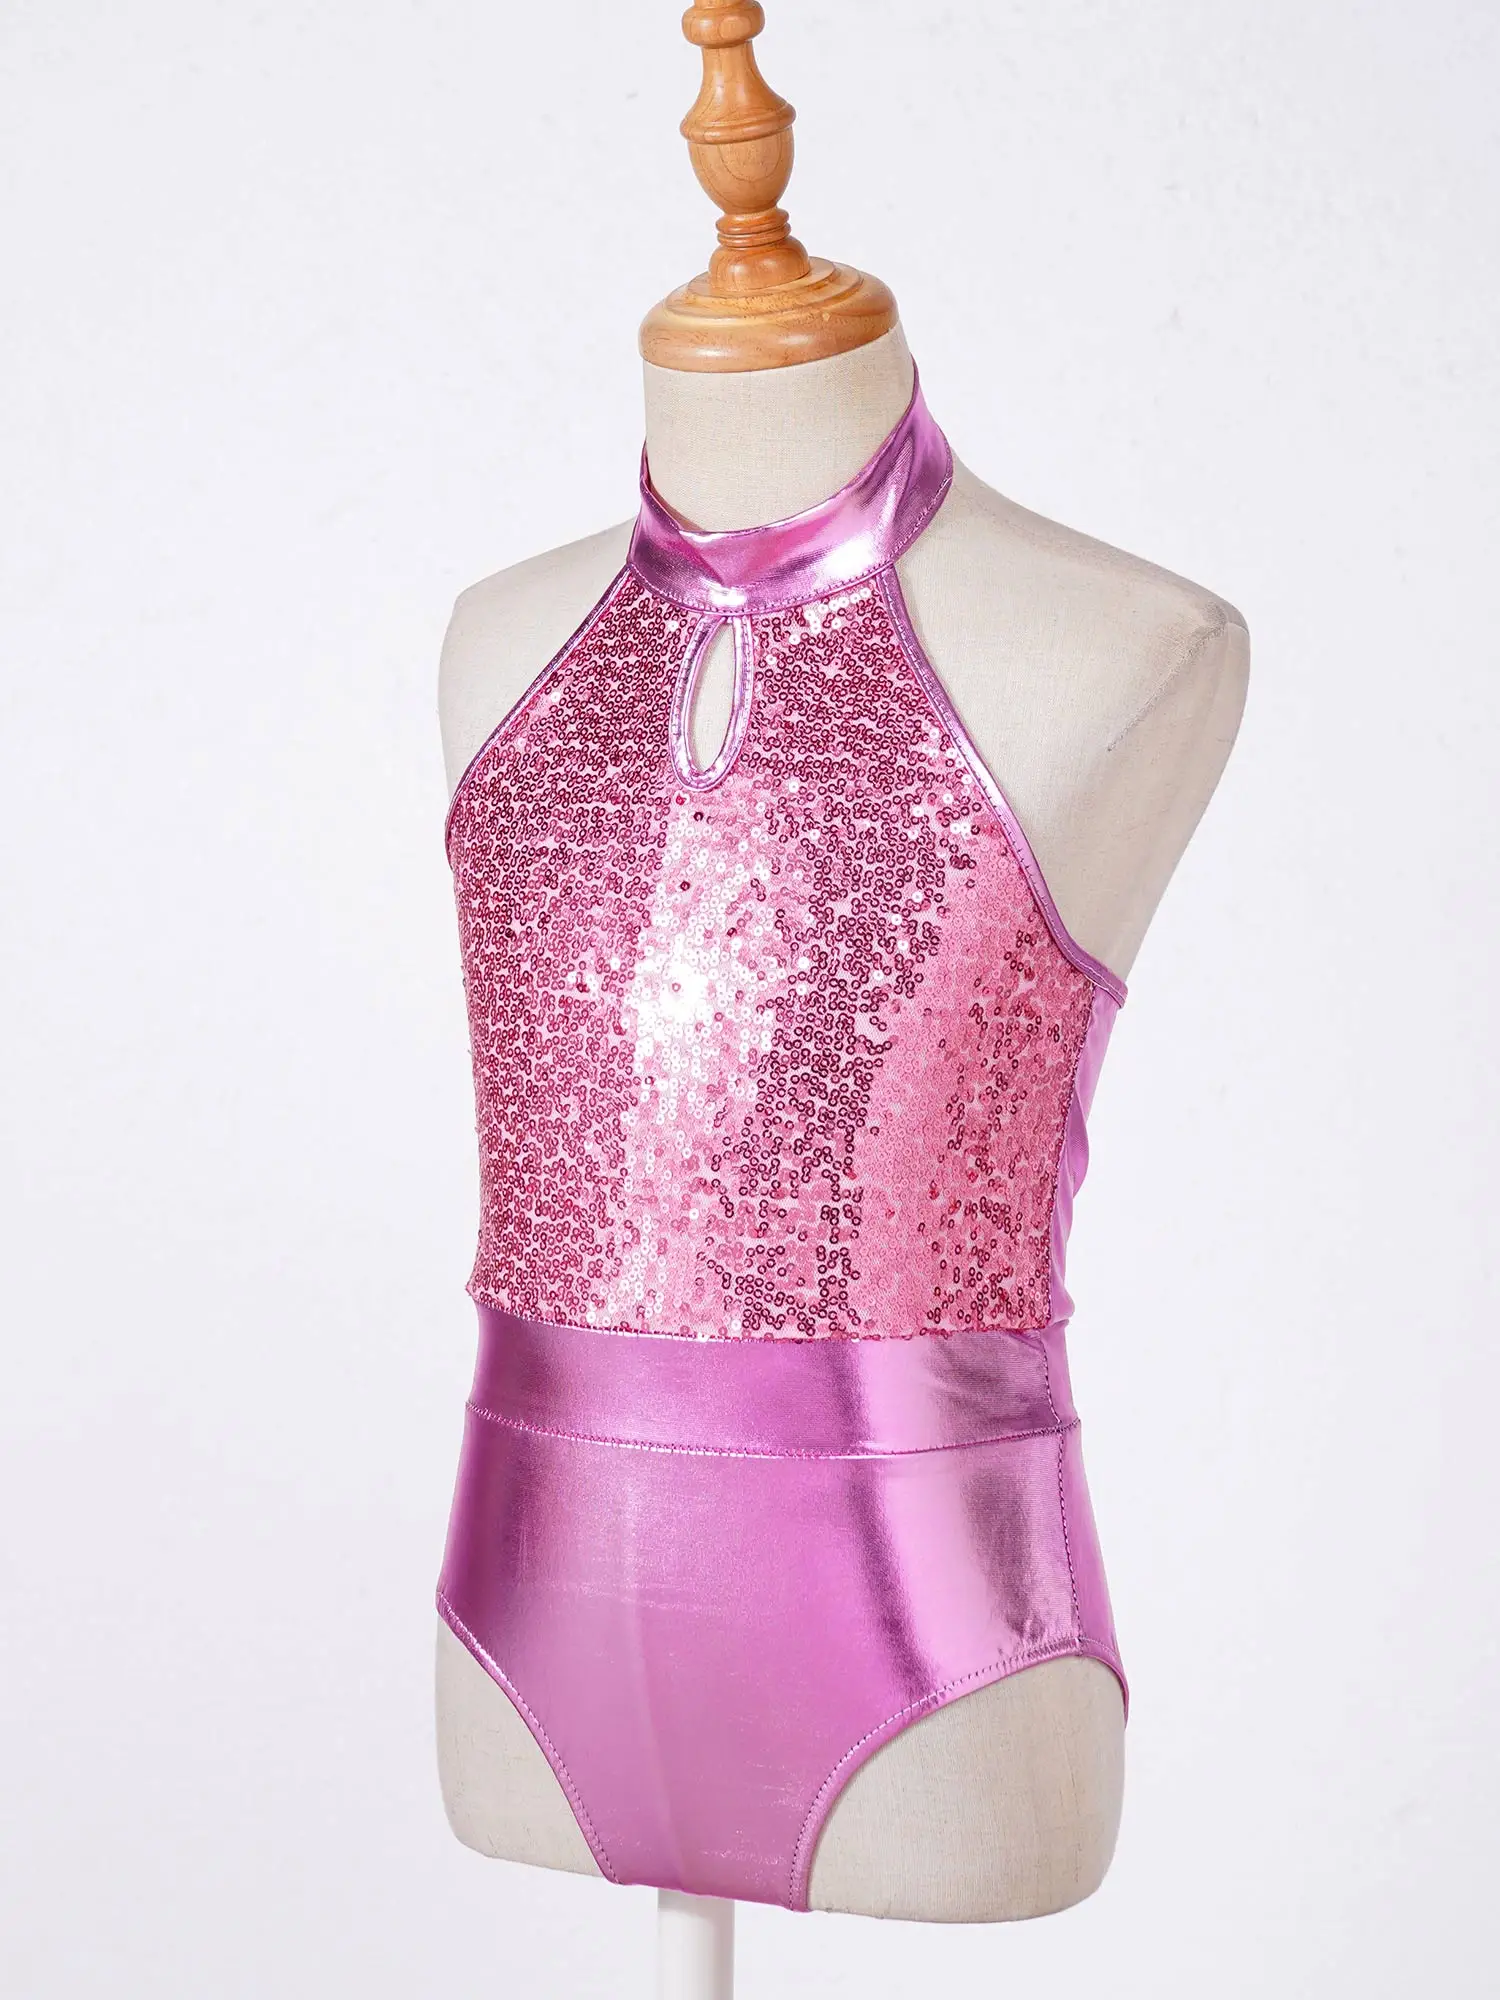 Sparkly Sequins Ballet Leotards for Girls Sleeveless Cutouts Back Strappy Waist Gymnastics Leotards Ballet Dance Costume Kids